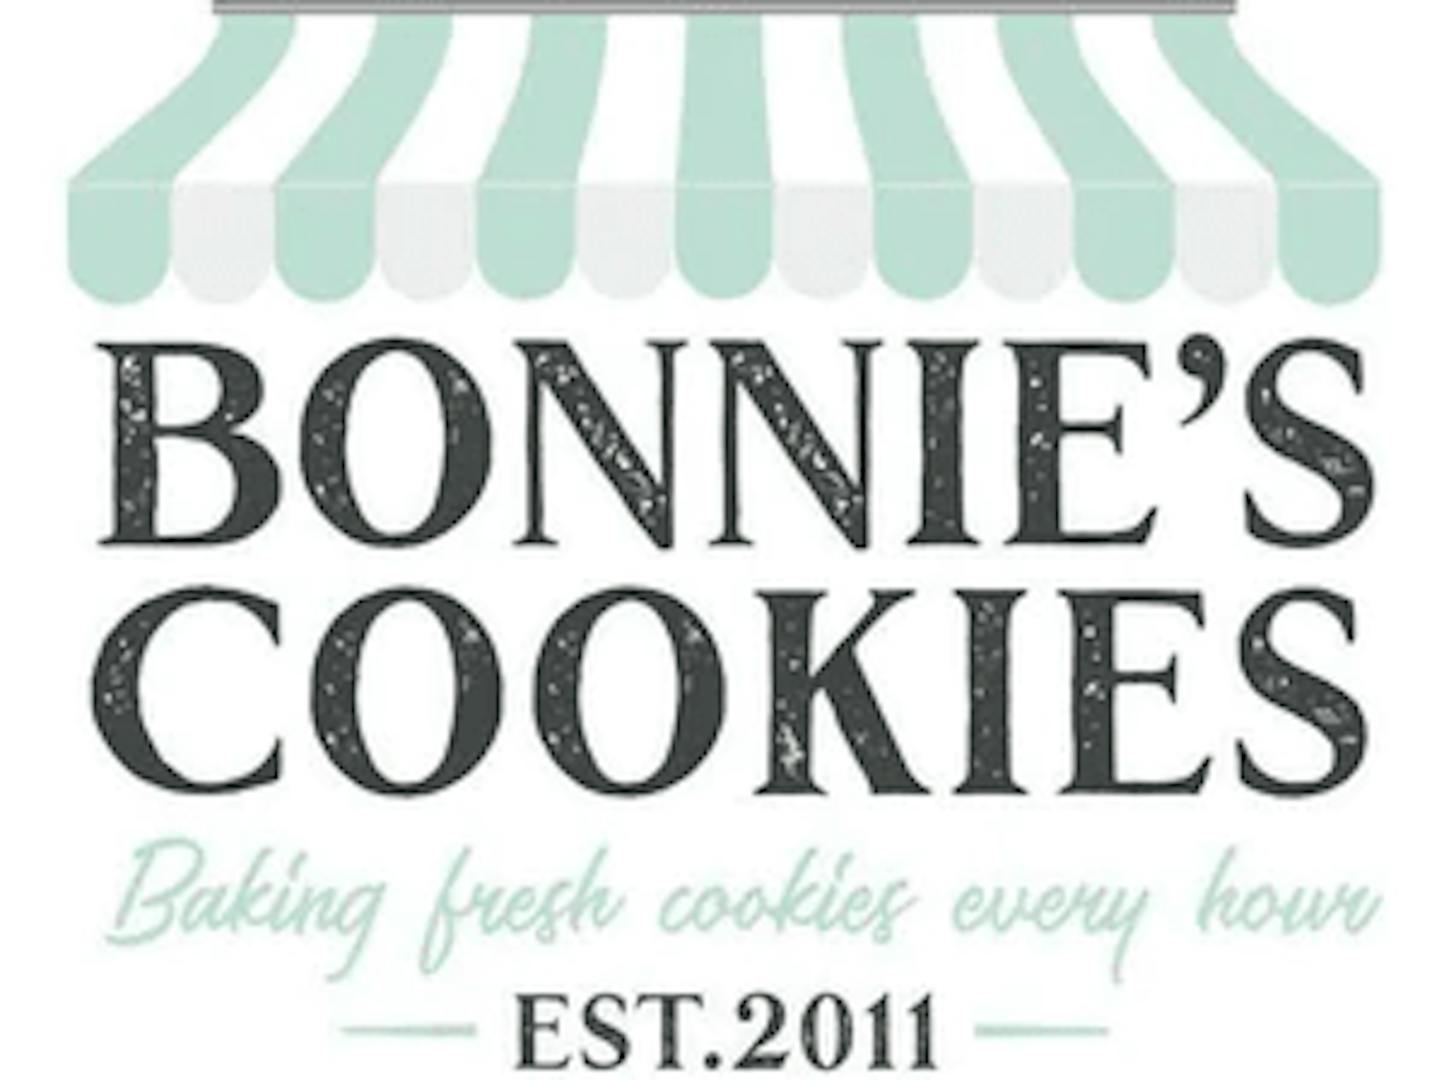 BONNIE'S COOKIES